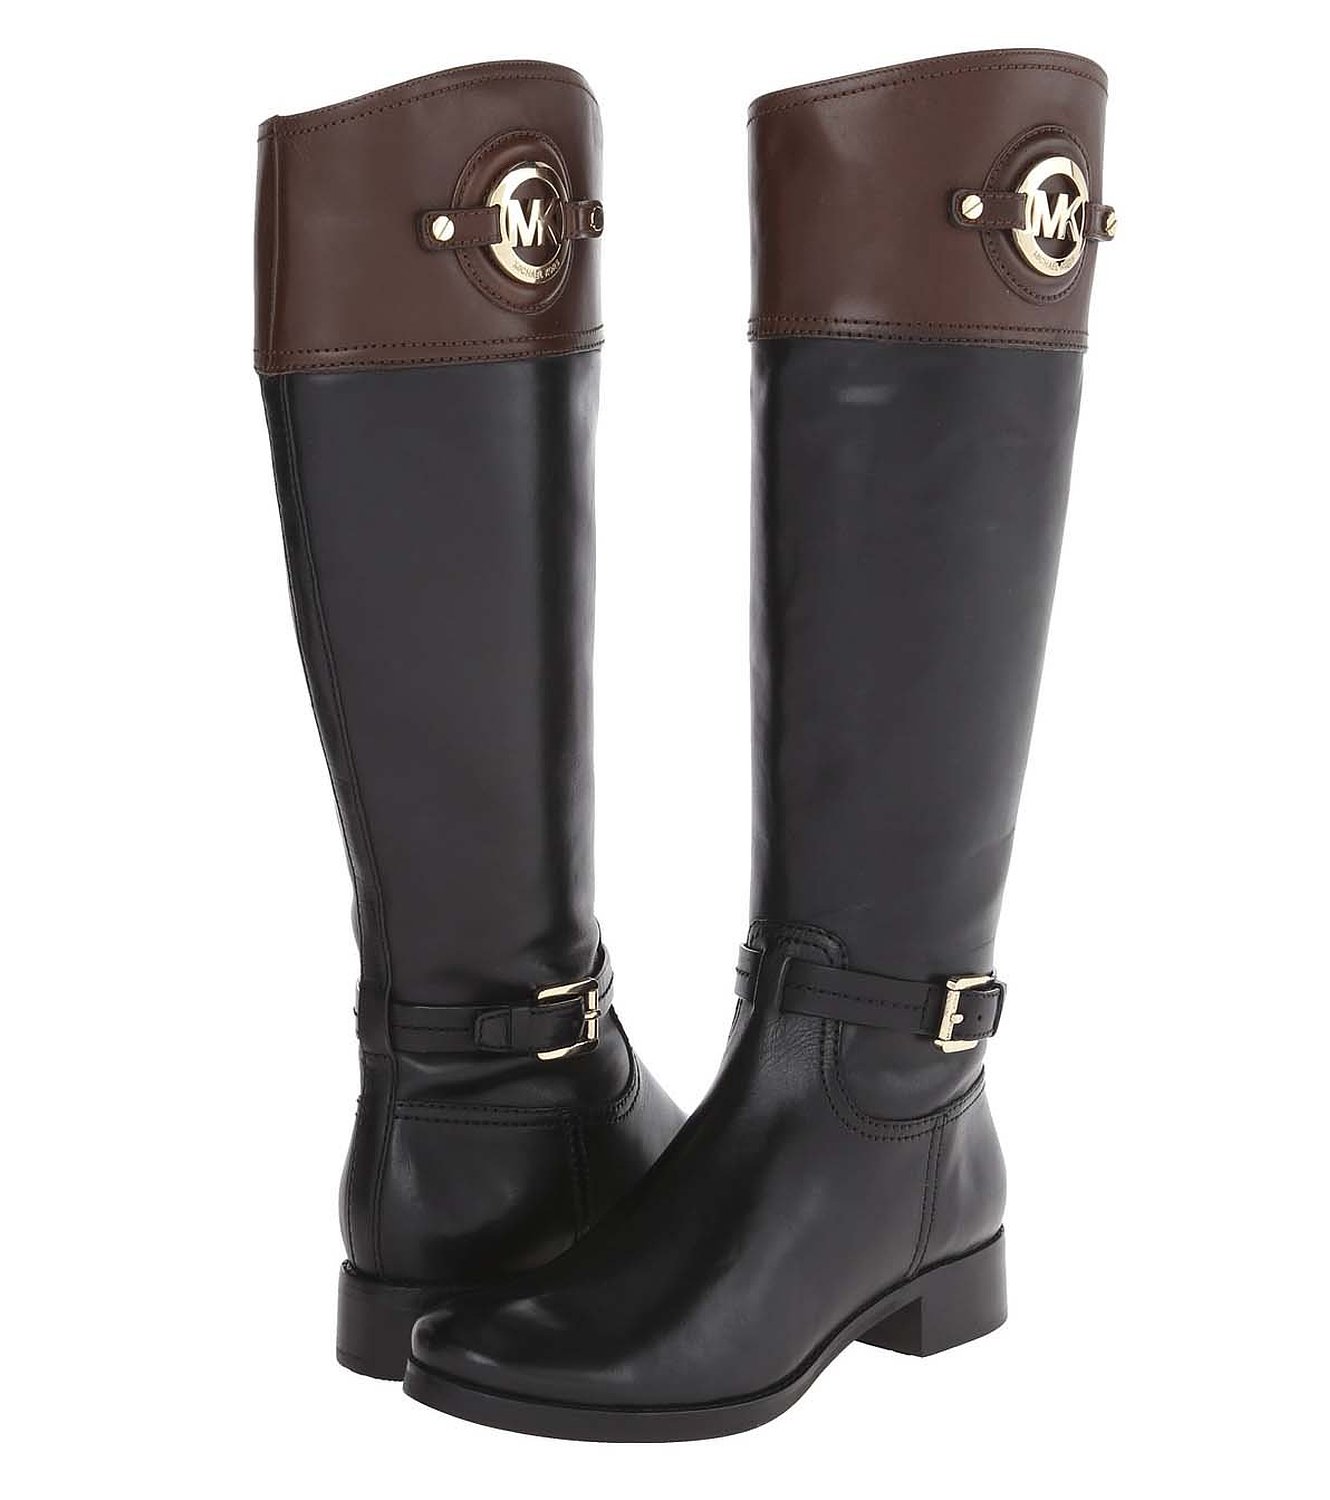 Top picks: Michael Michael Kors knee high boots - My Fashion Wants